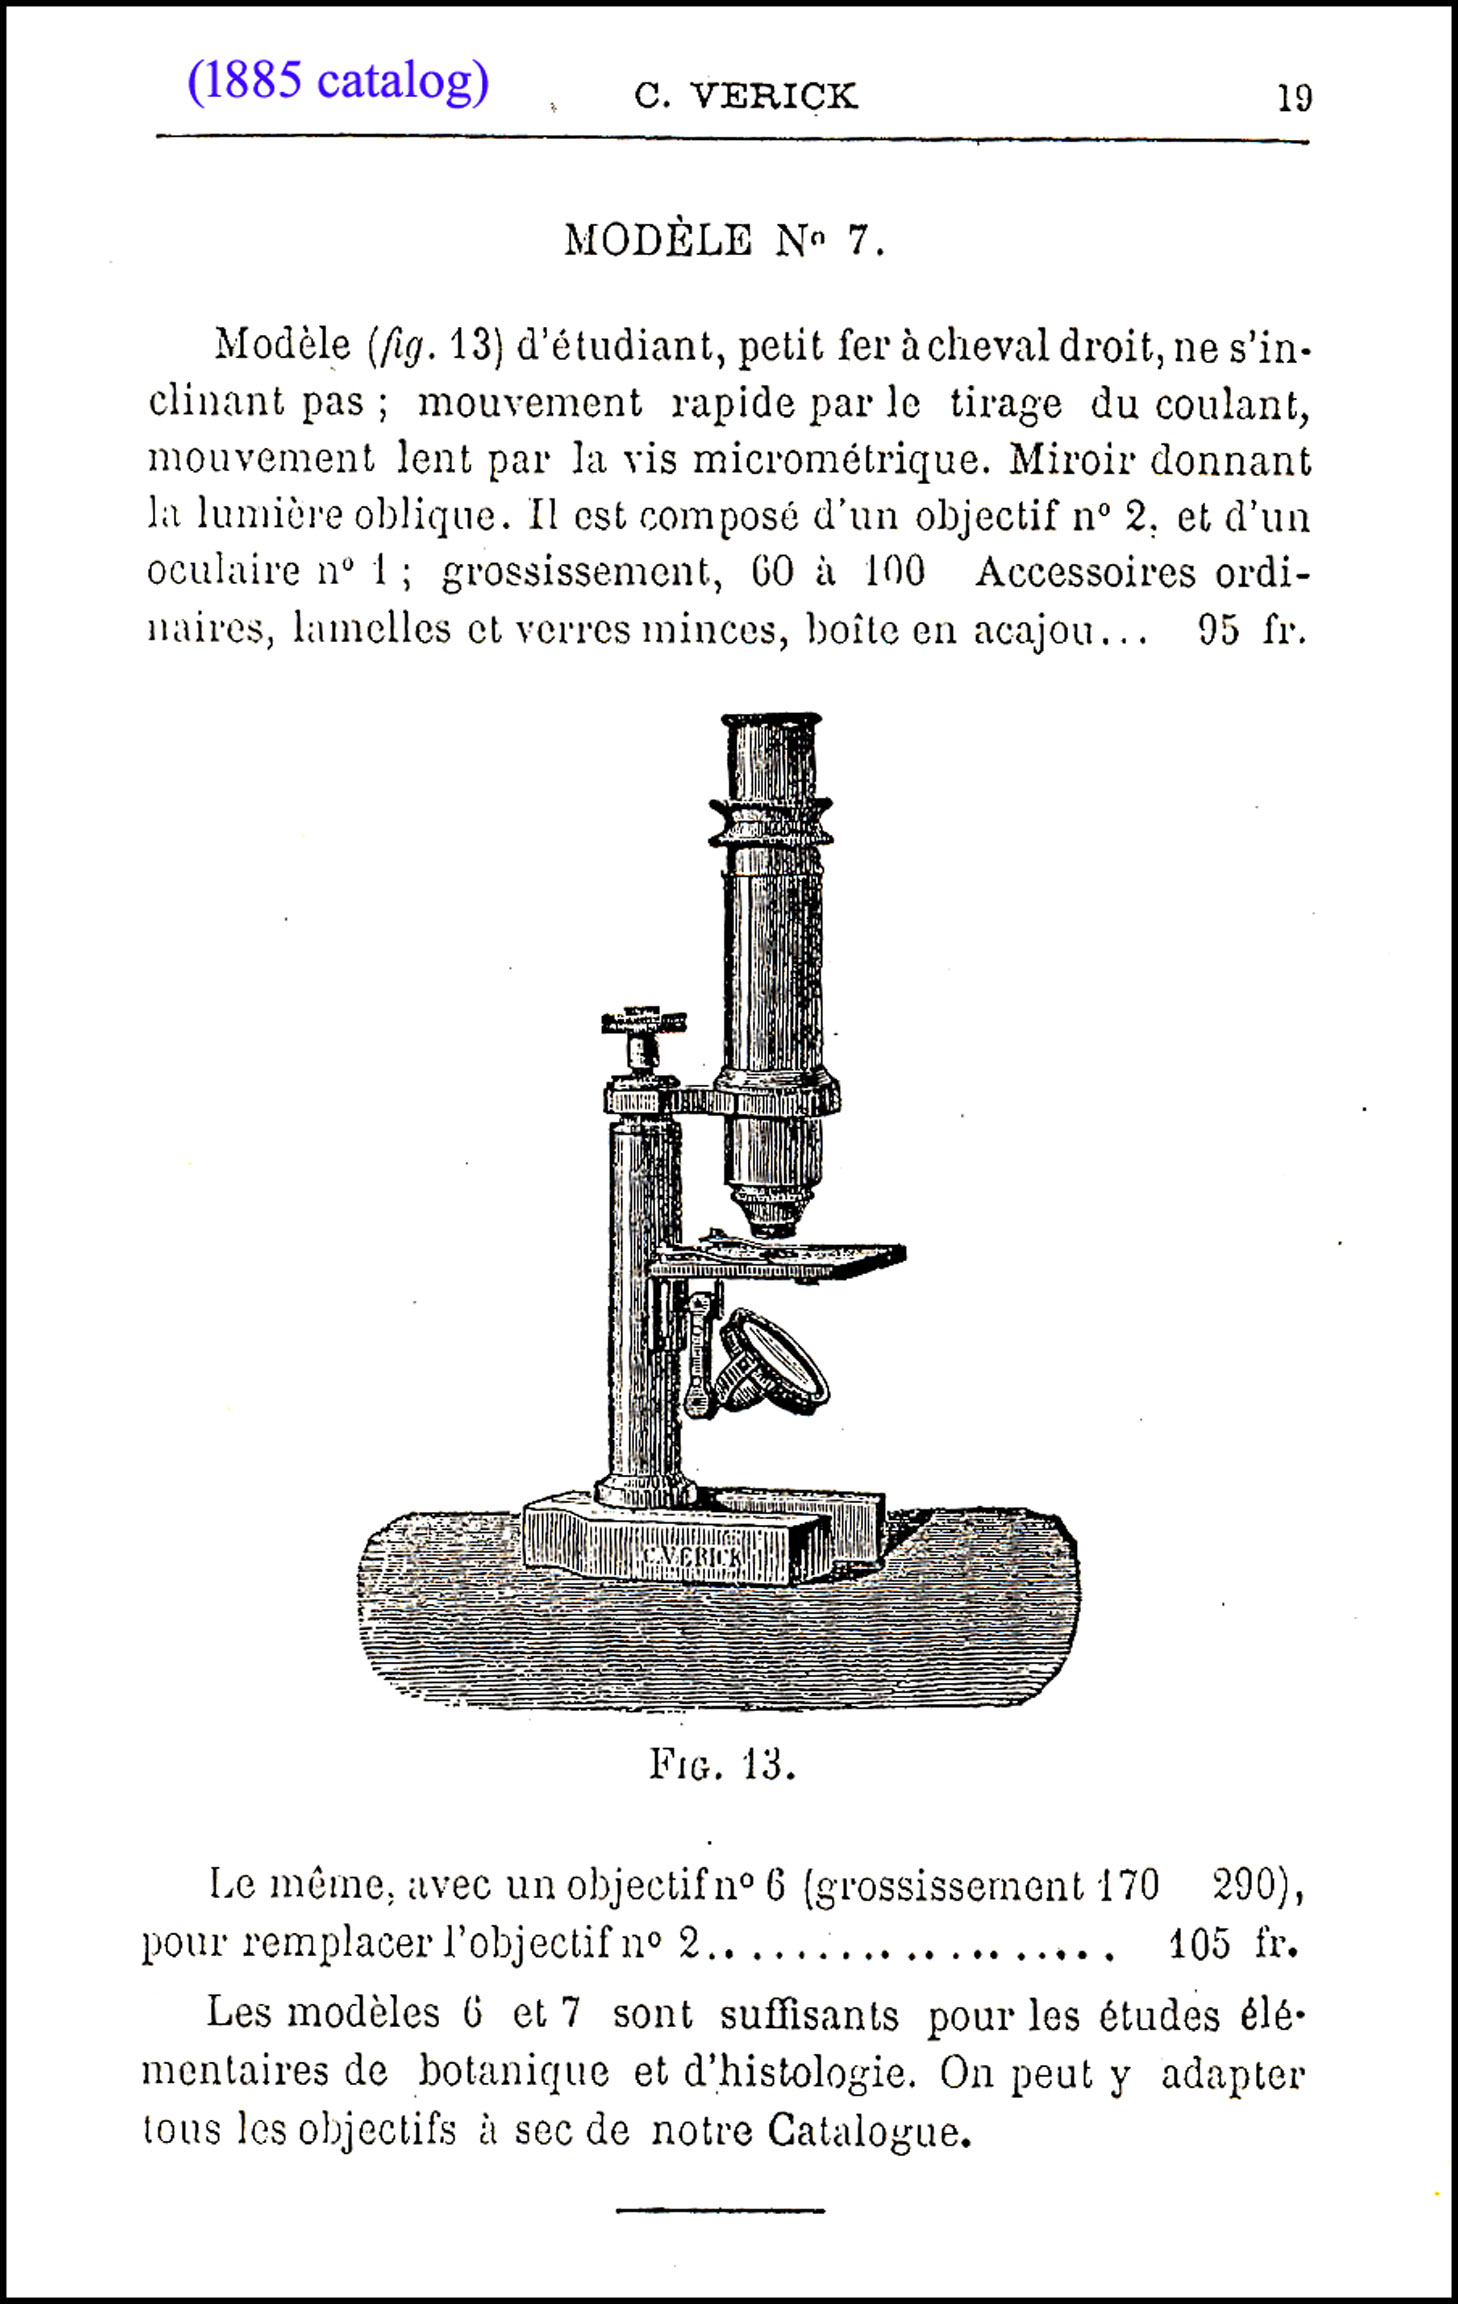 1885 Catalog entry for Verick No 7 Microscope